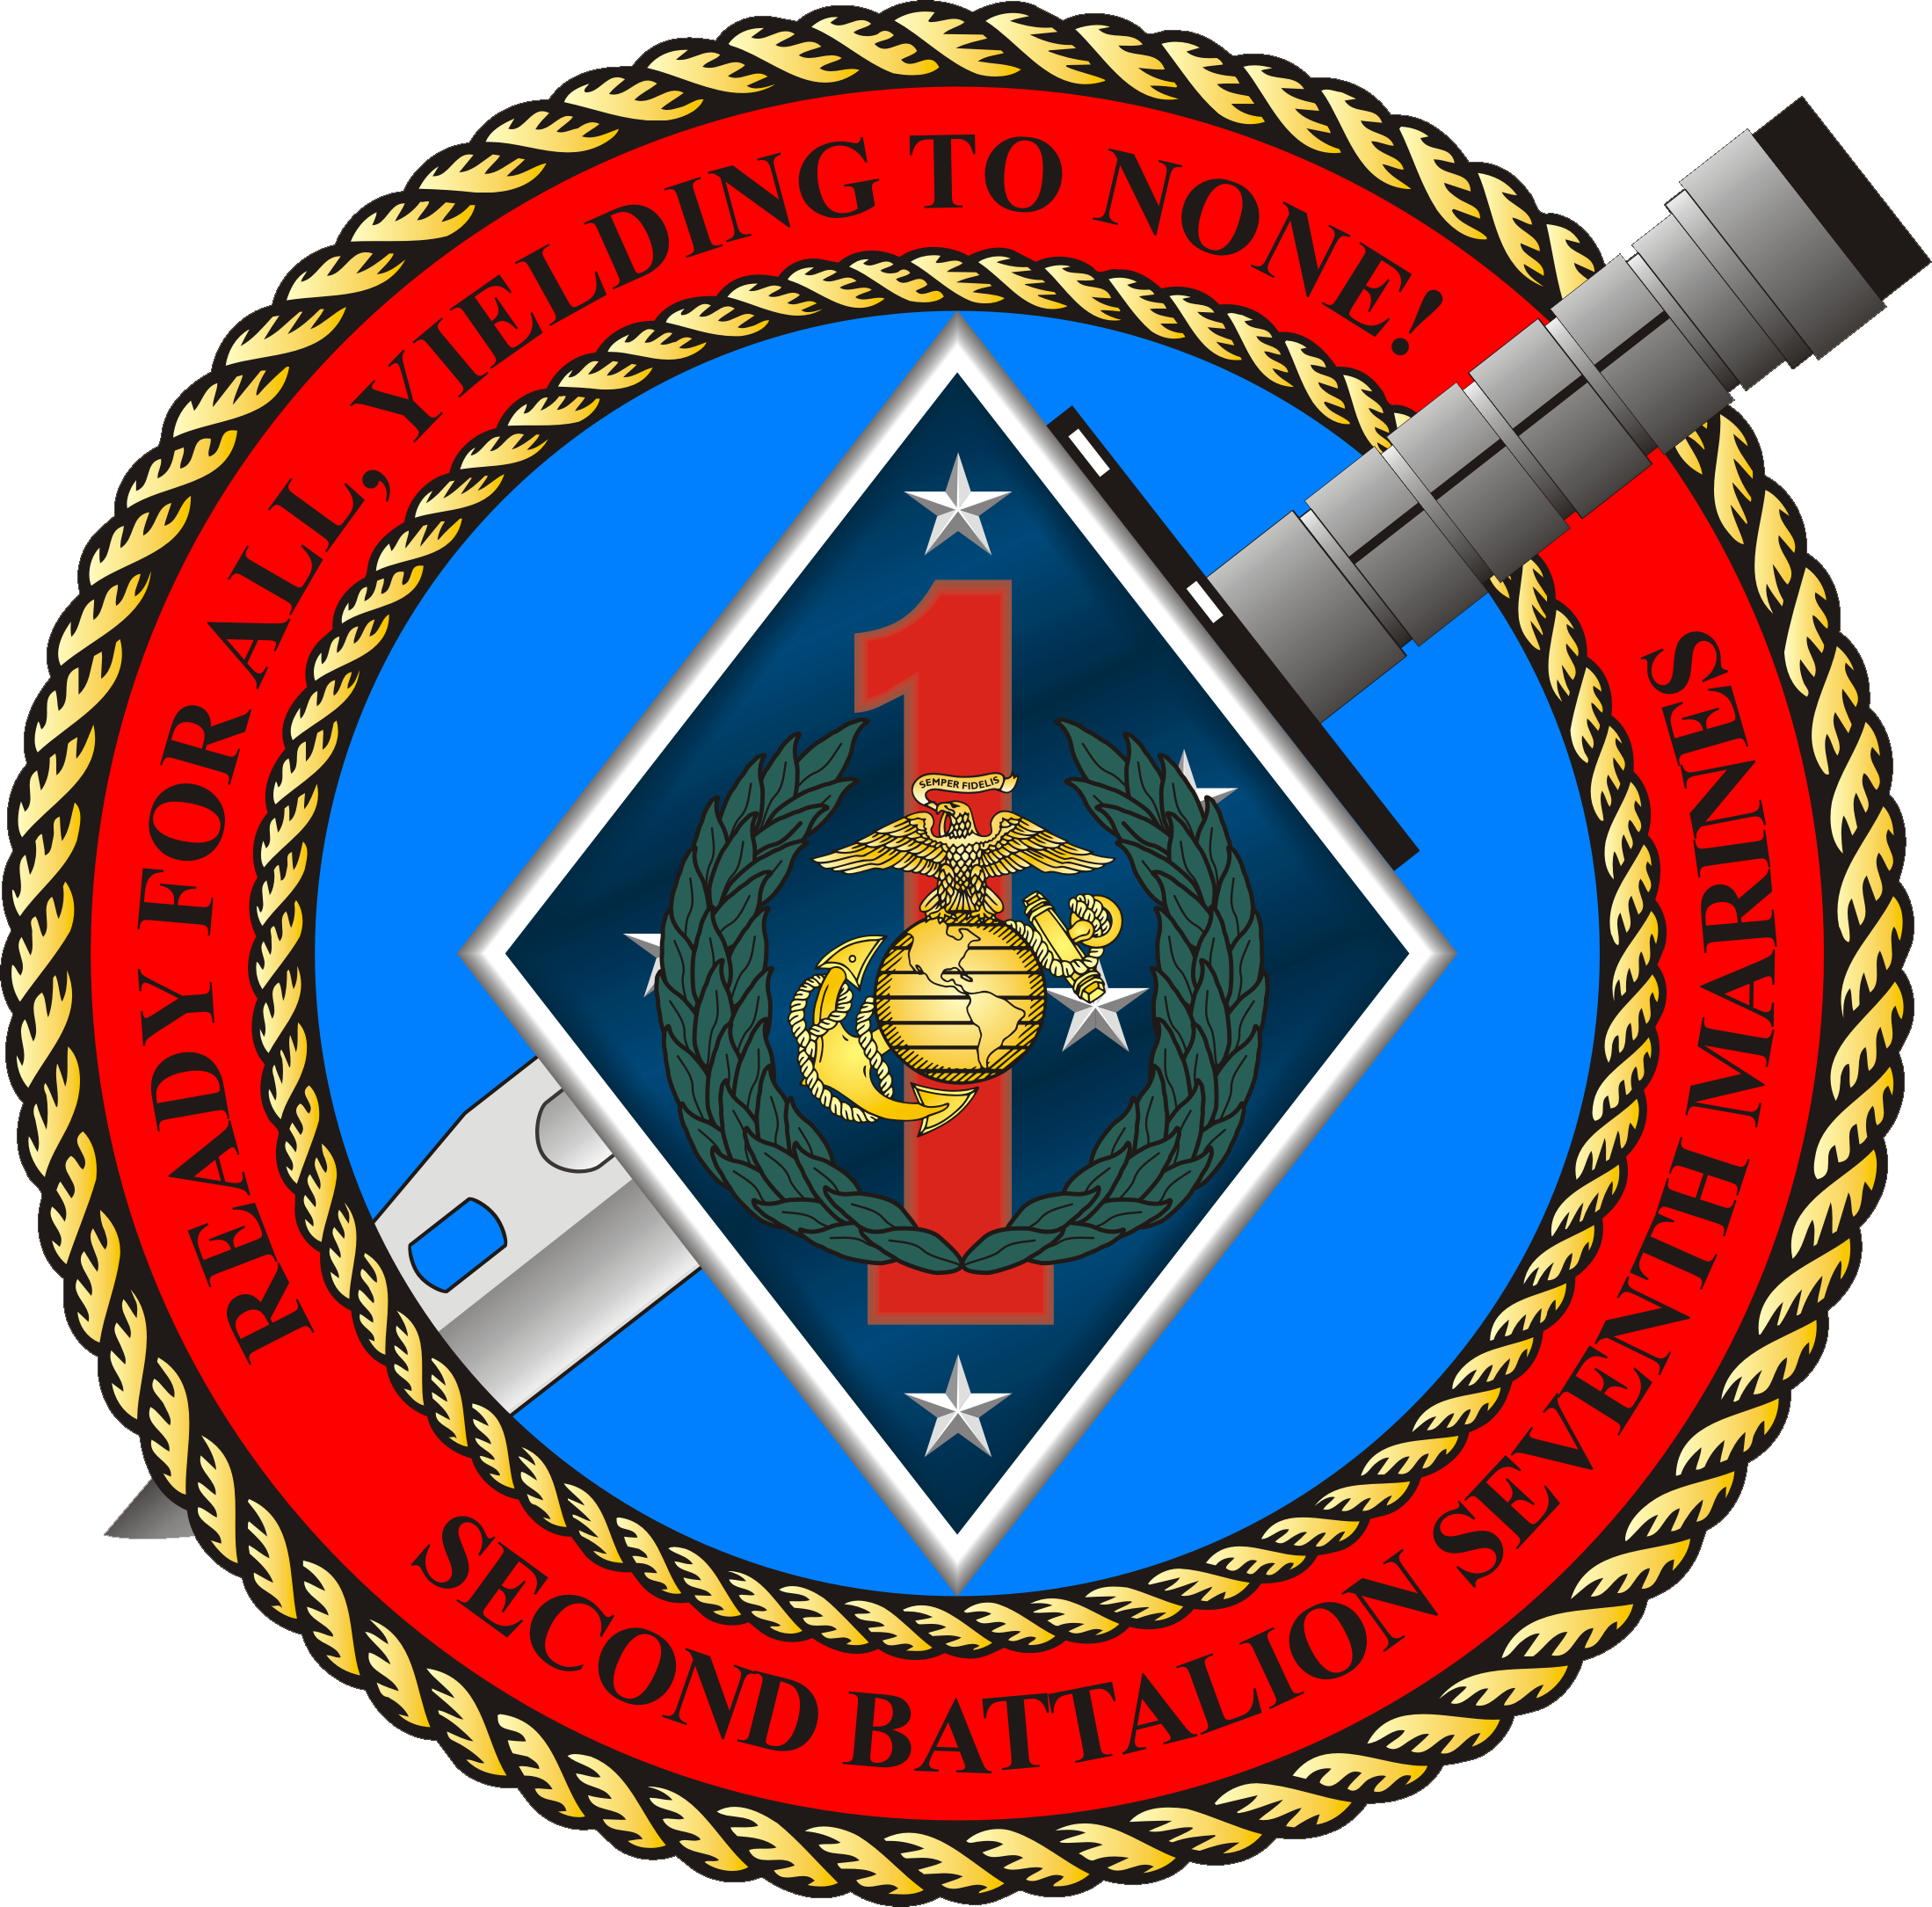 1st marine division tattoo